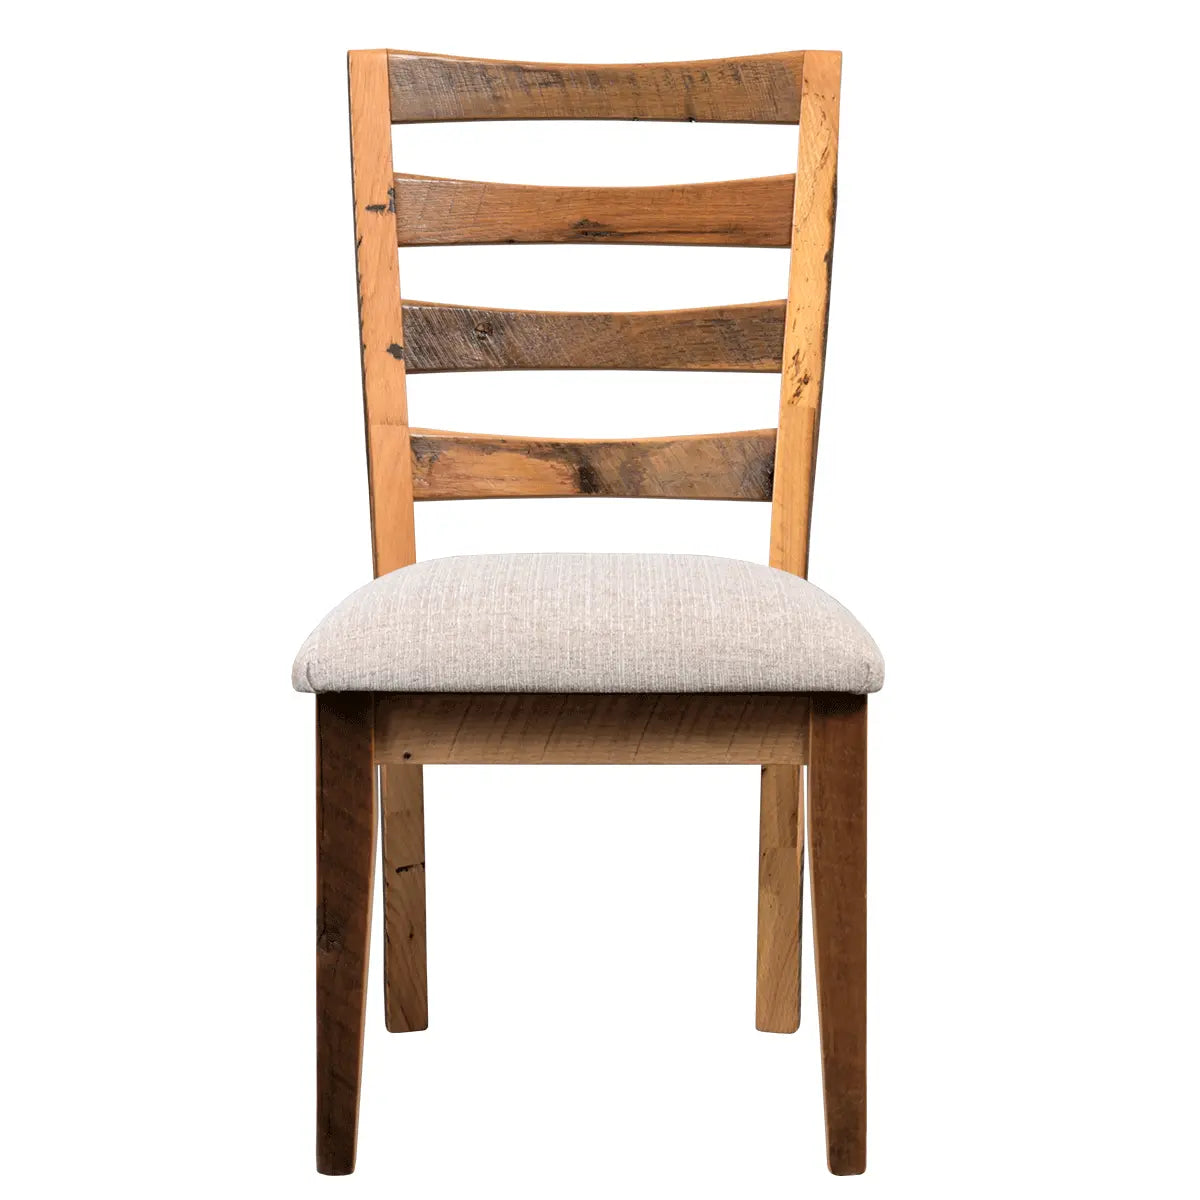 Reclaimed Barn Wood Upholstered Ladderback Dining Chair